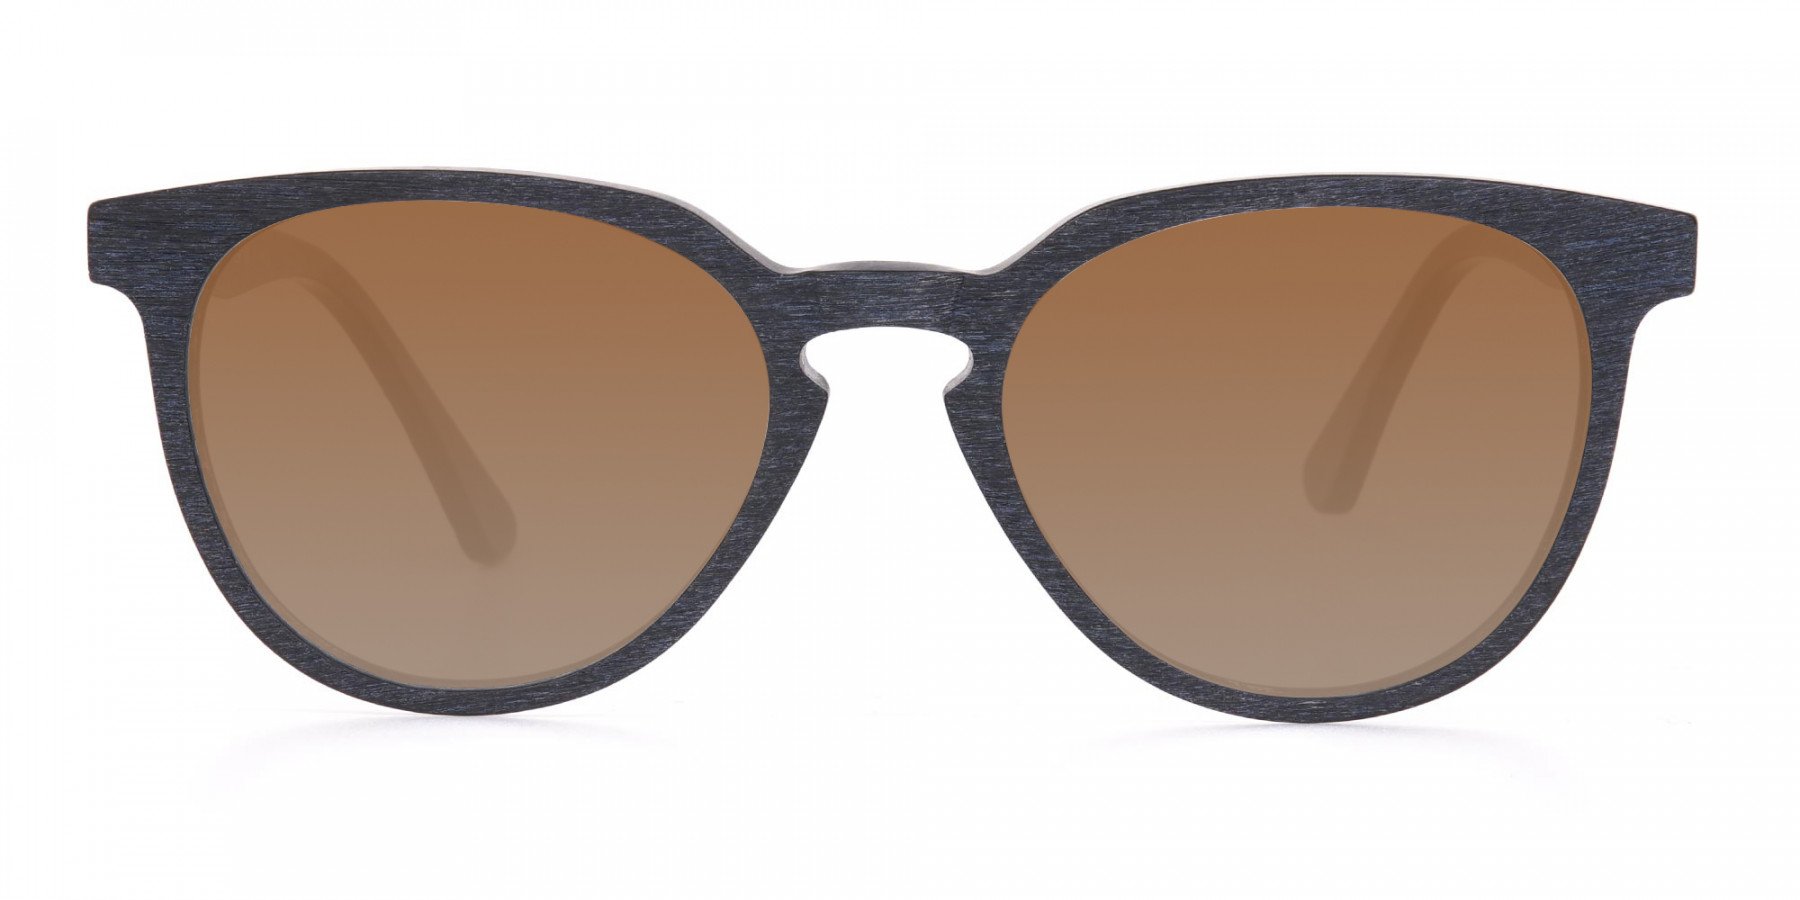 Black Wood Sunglasses with Dark Brown Tint - 3